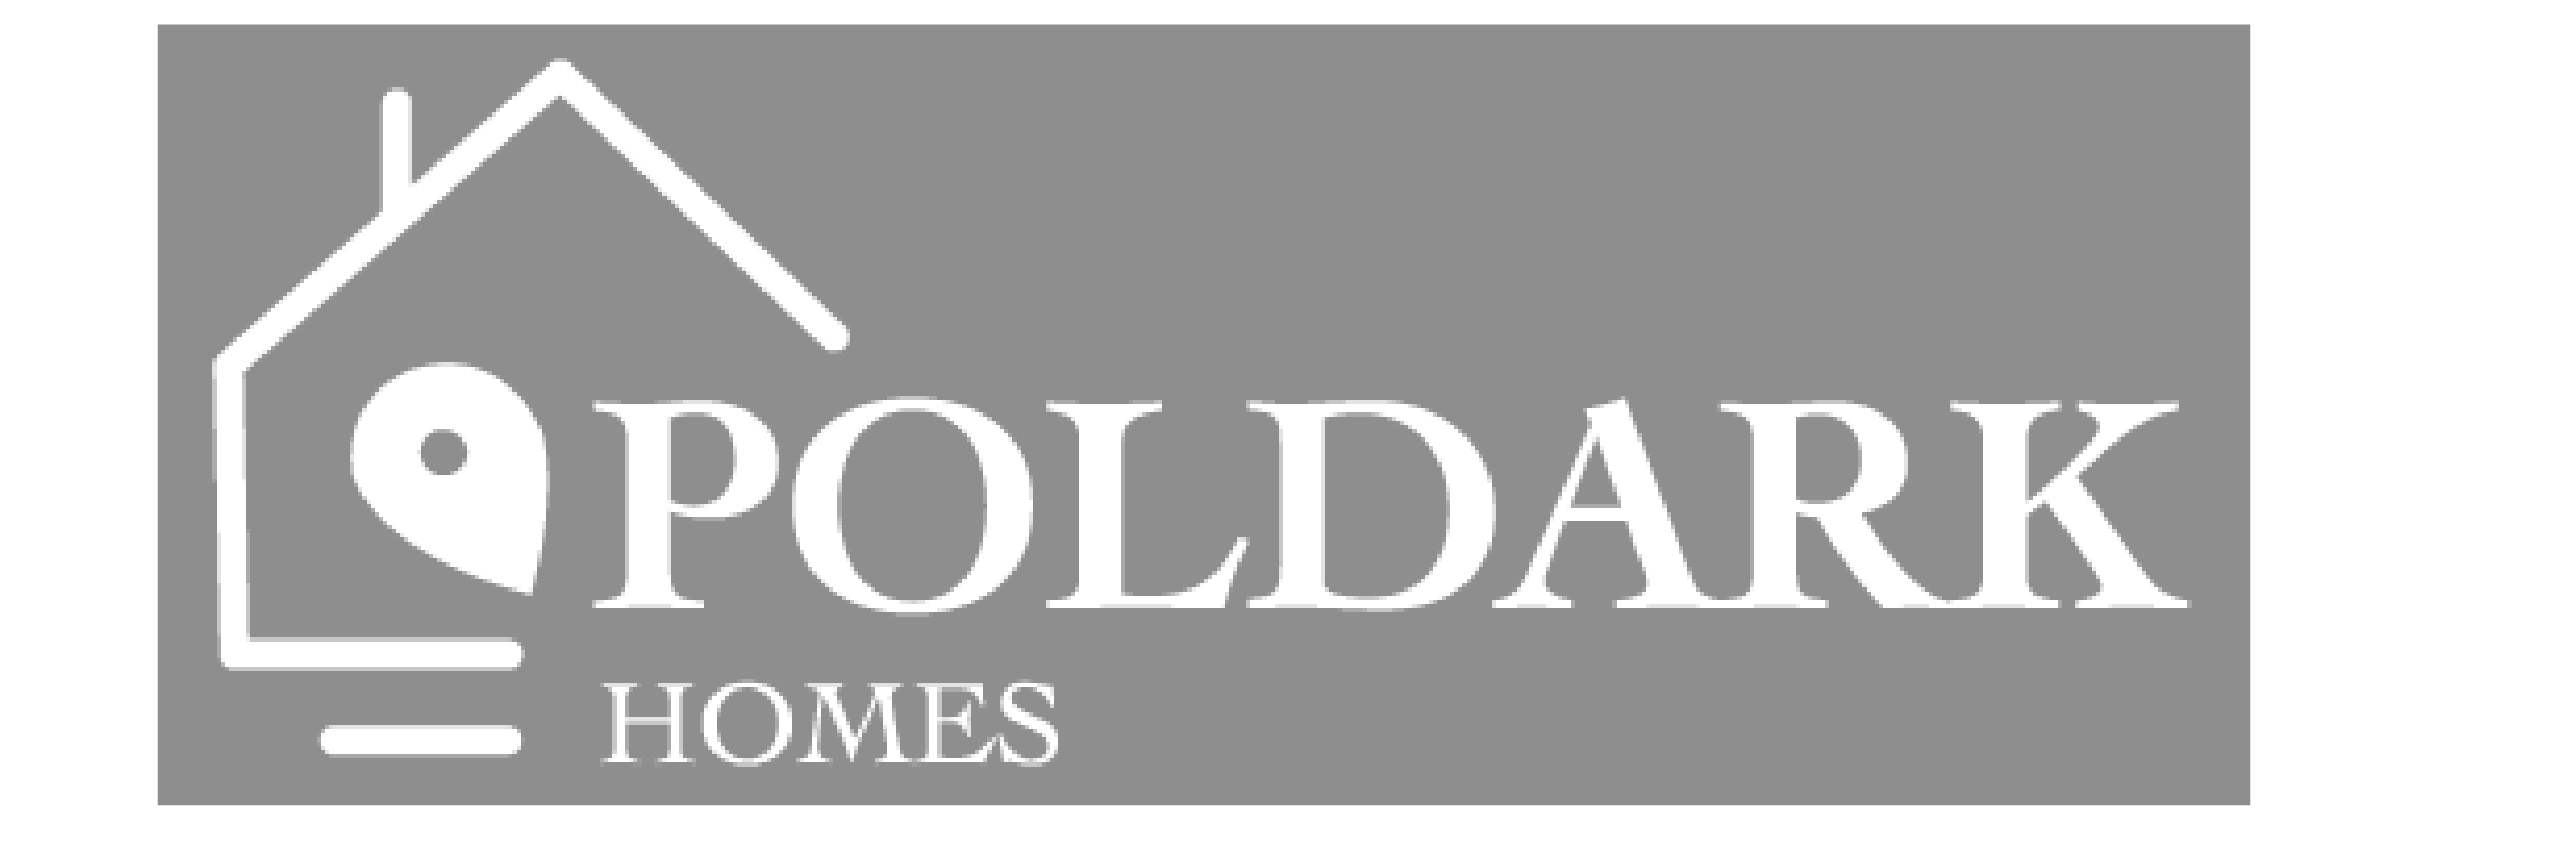 Poldark Homes logo - The Gove Group